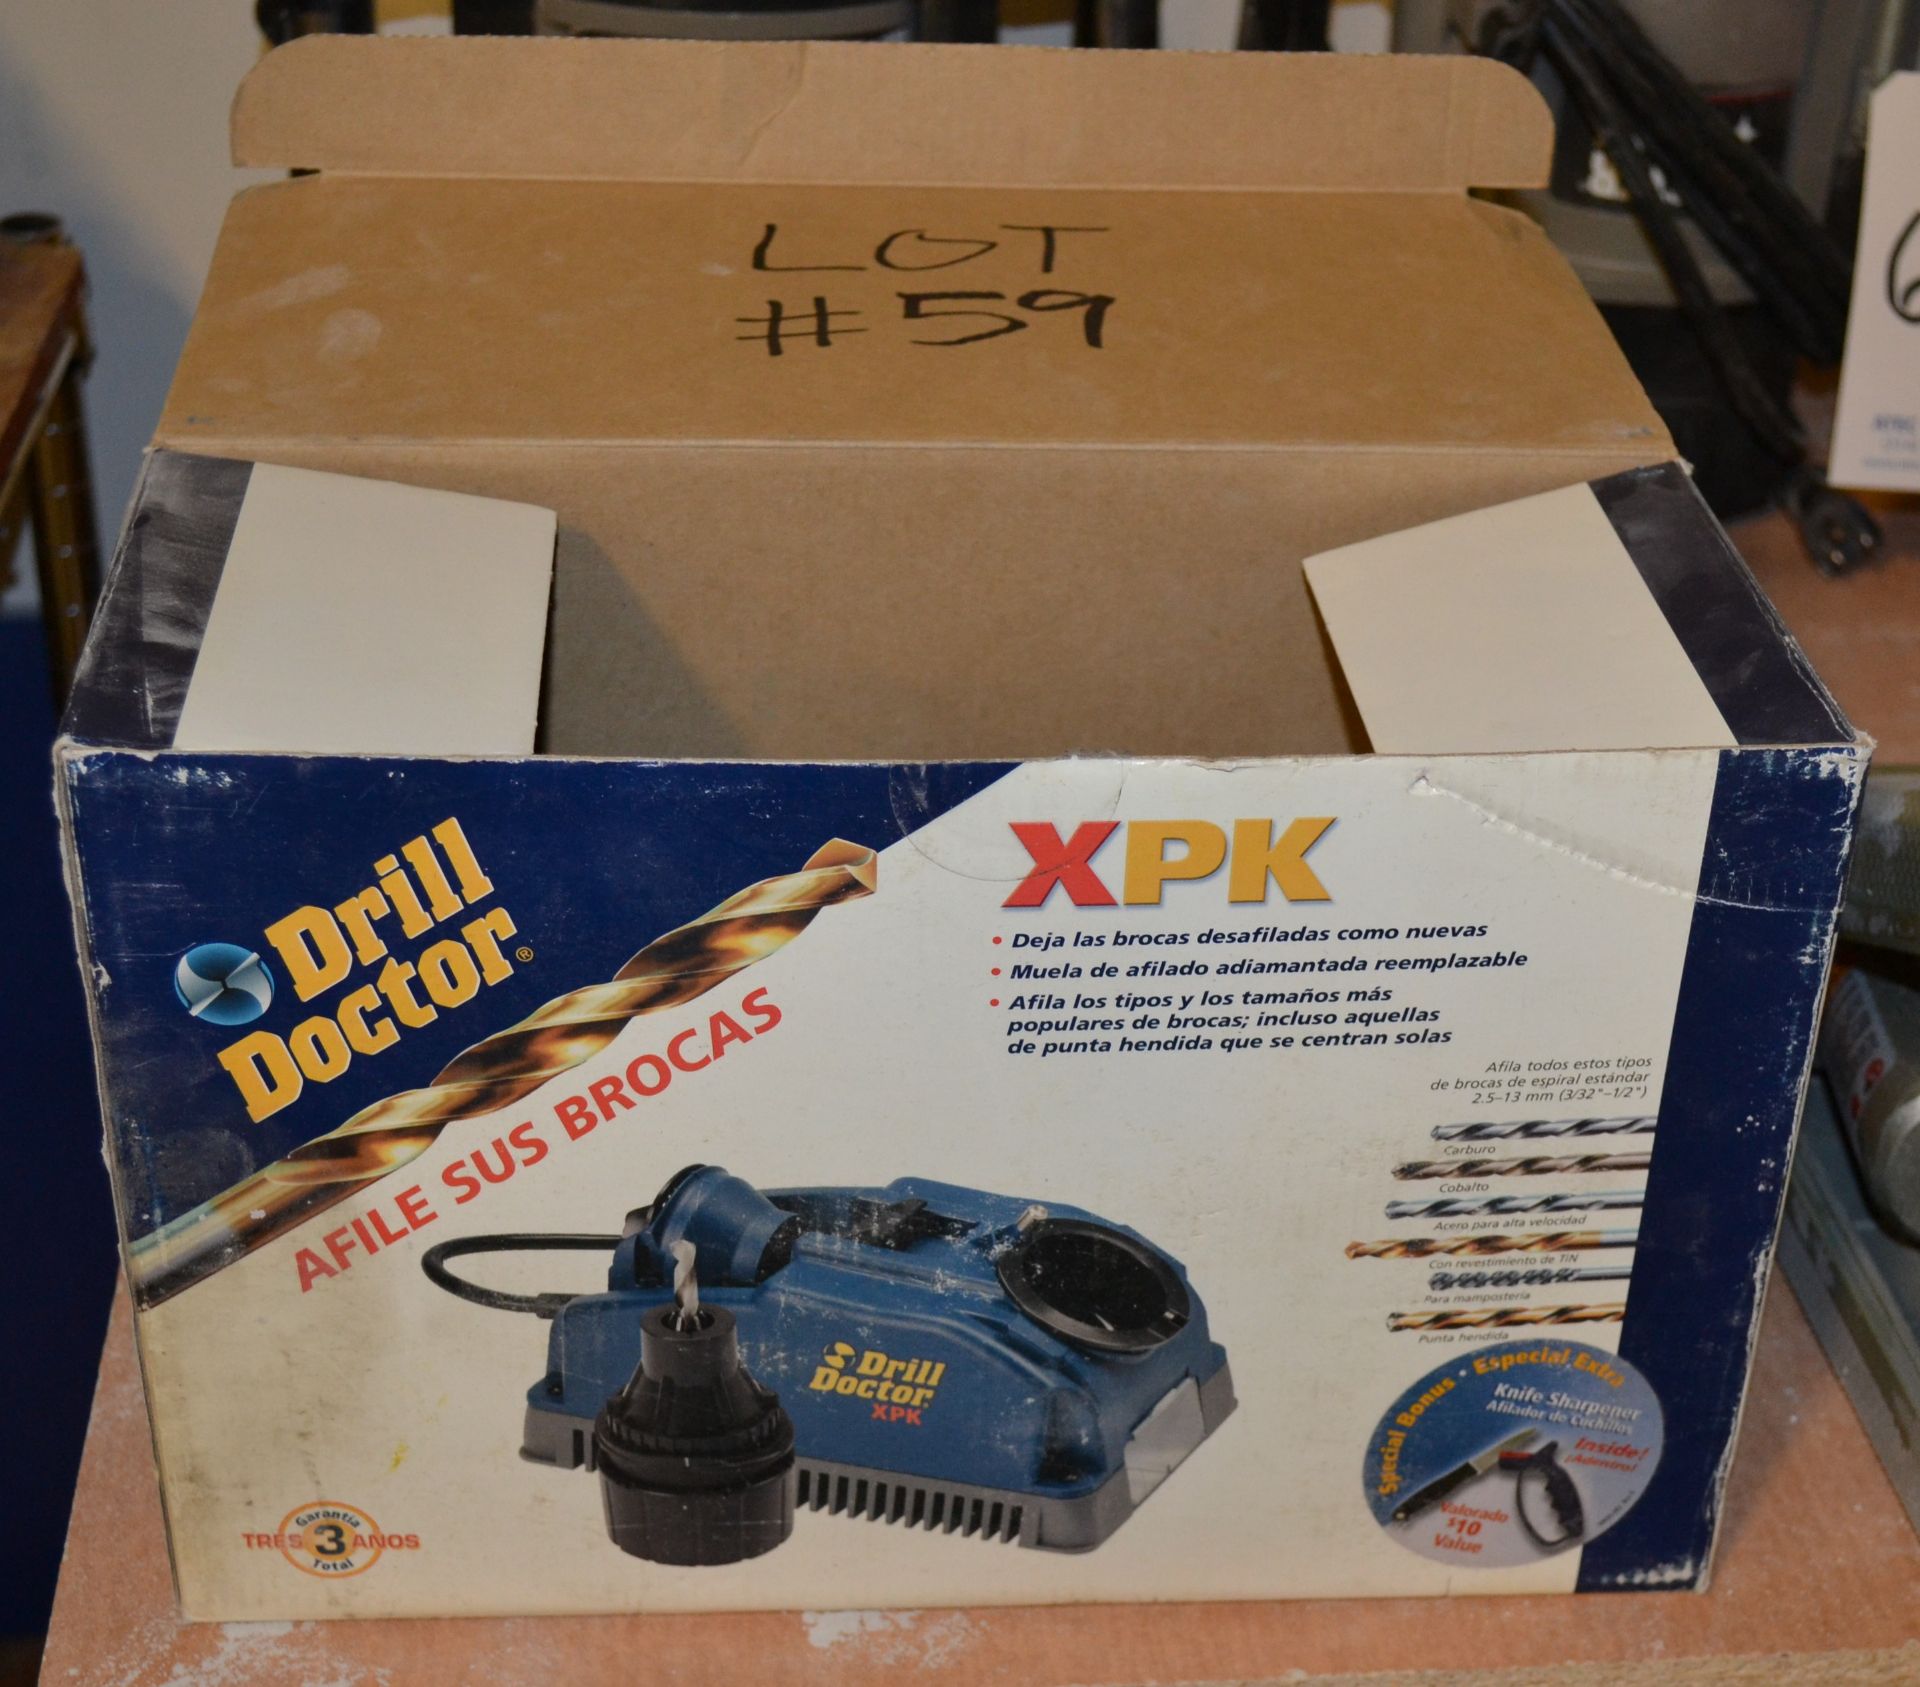 Drill Doctor Model XPK Drill Bit Sharpener